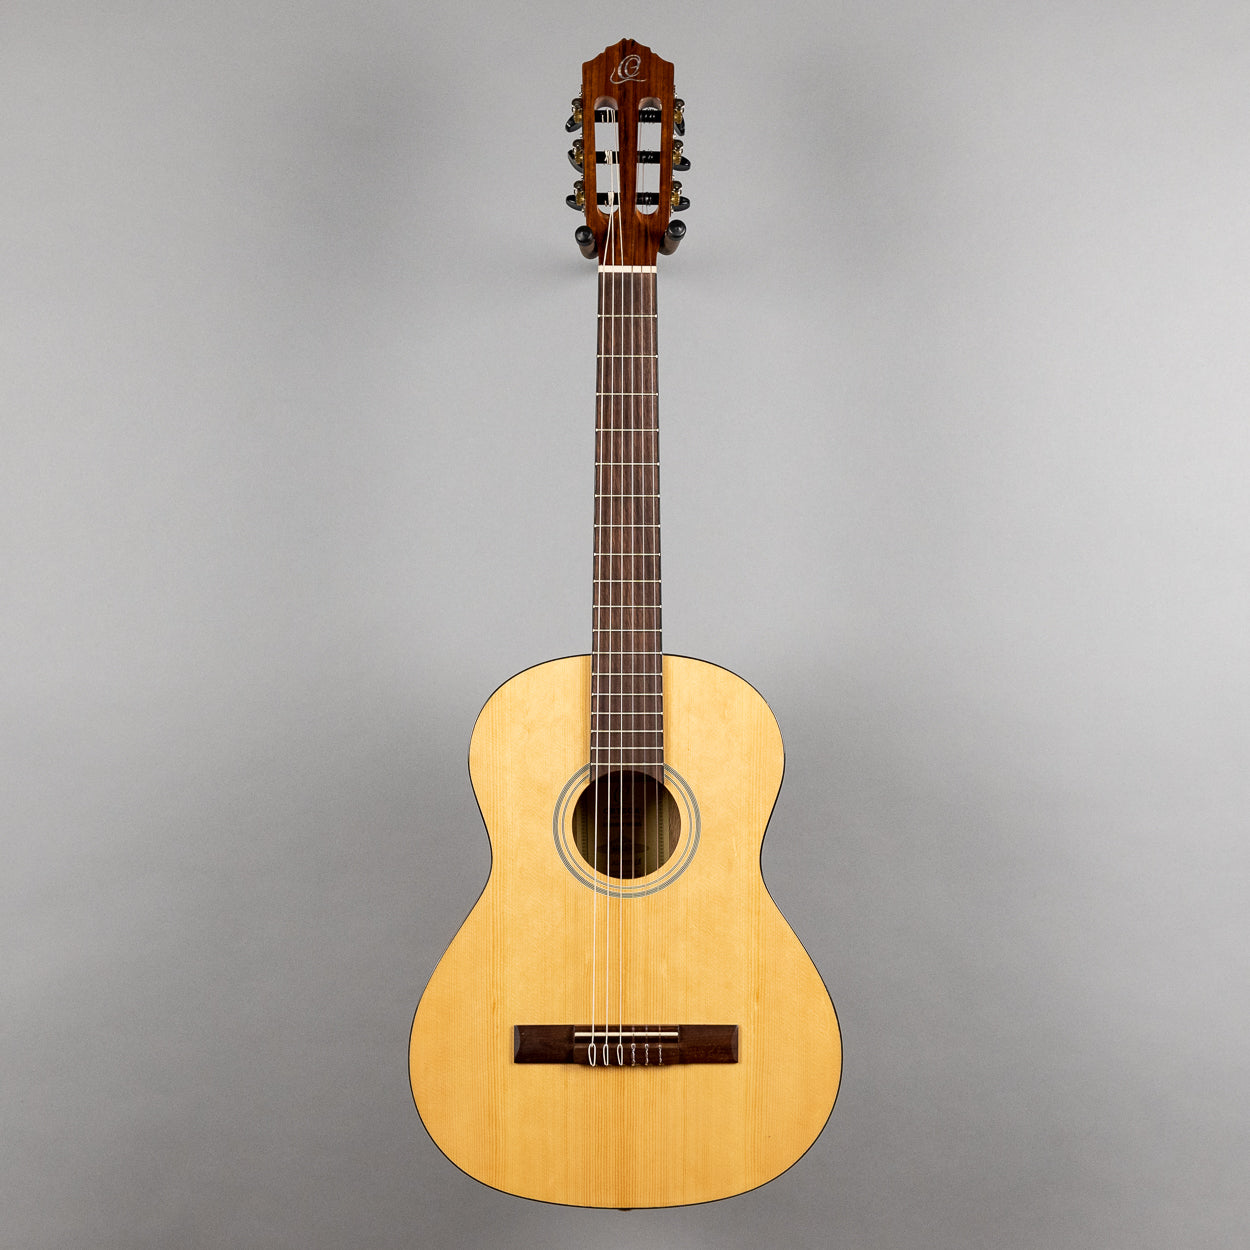 Ortega RST5 3/4 Size Student Classical Guitar, Natural Finish